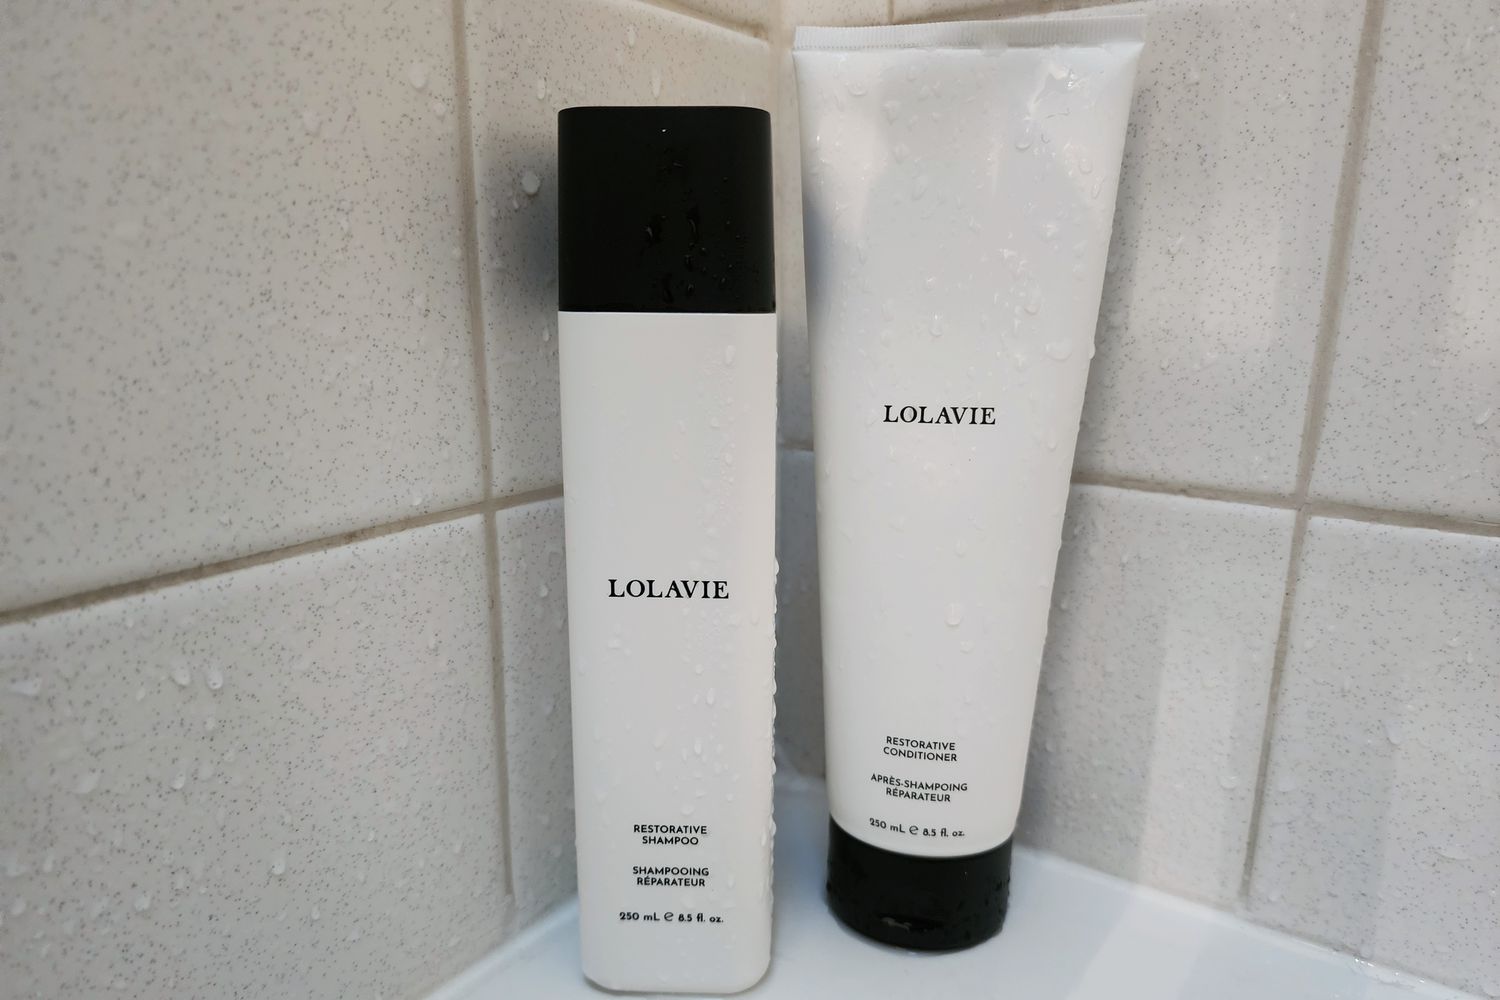 Bottles of LolaVie Restorative Shampoo and Conditioner